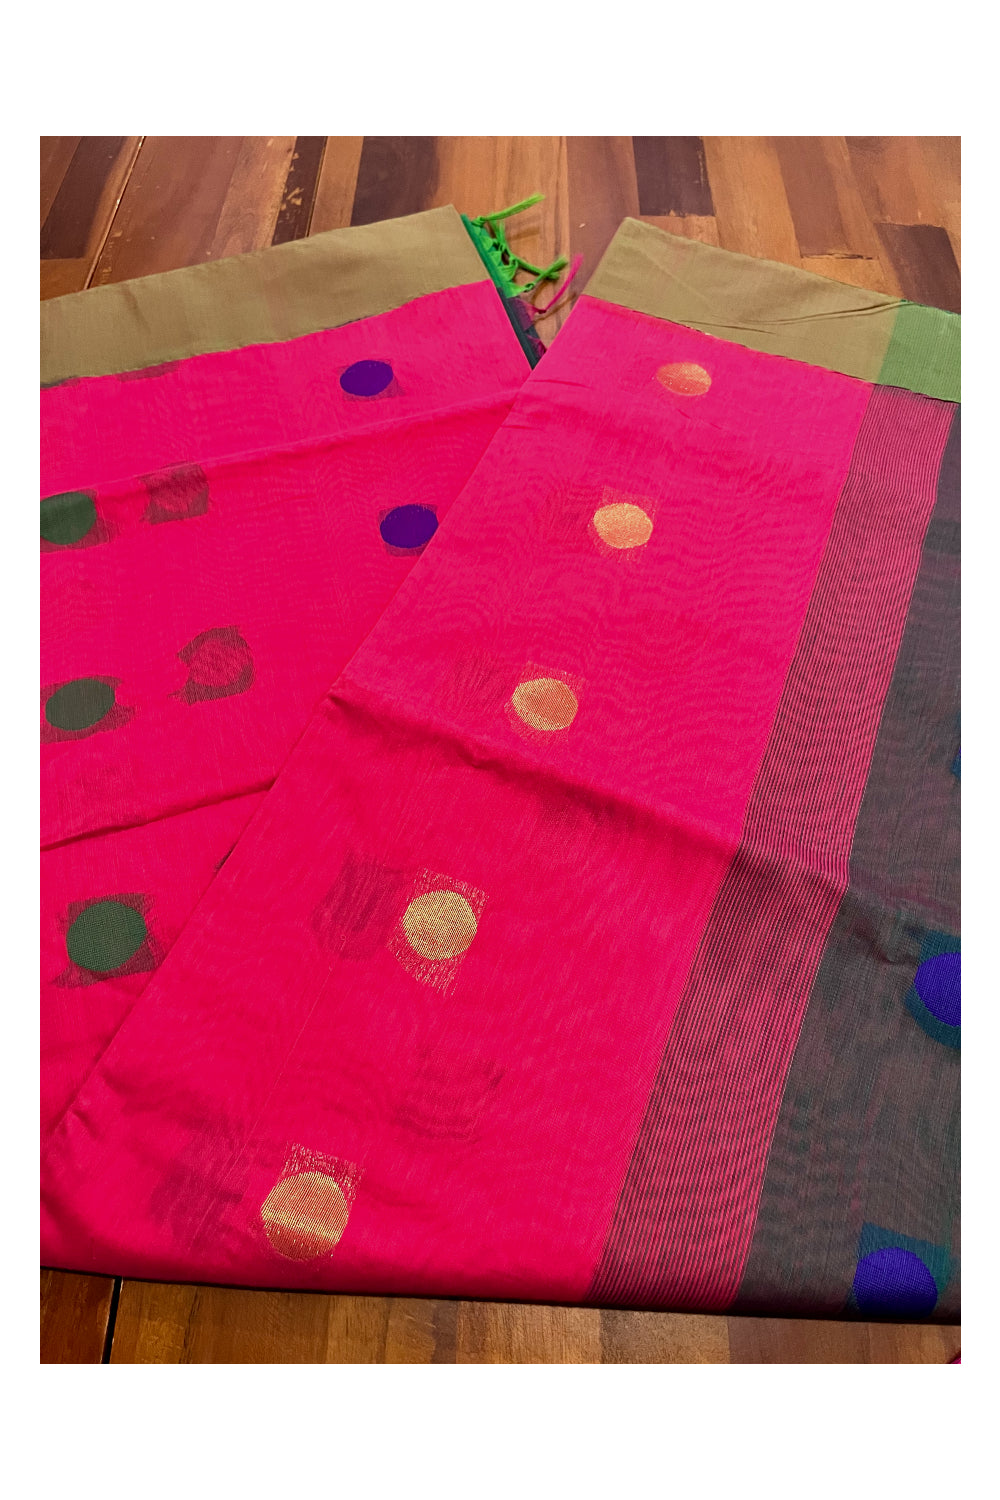 Southloom Cotton Pinkish Magenta Saree with Polka Woven Designs and Green Border